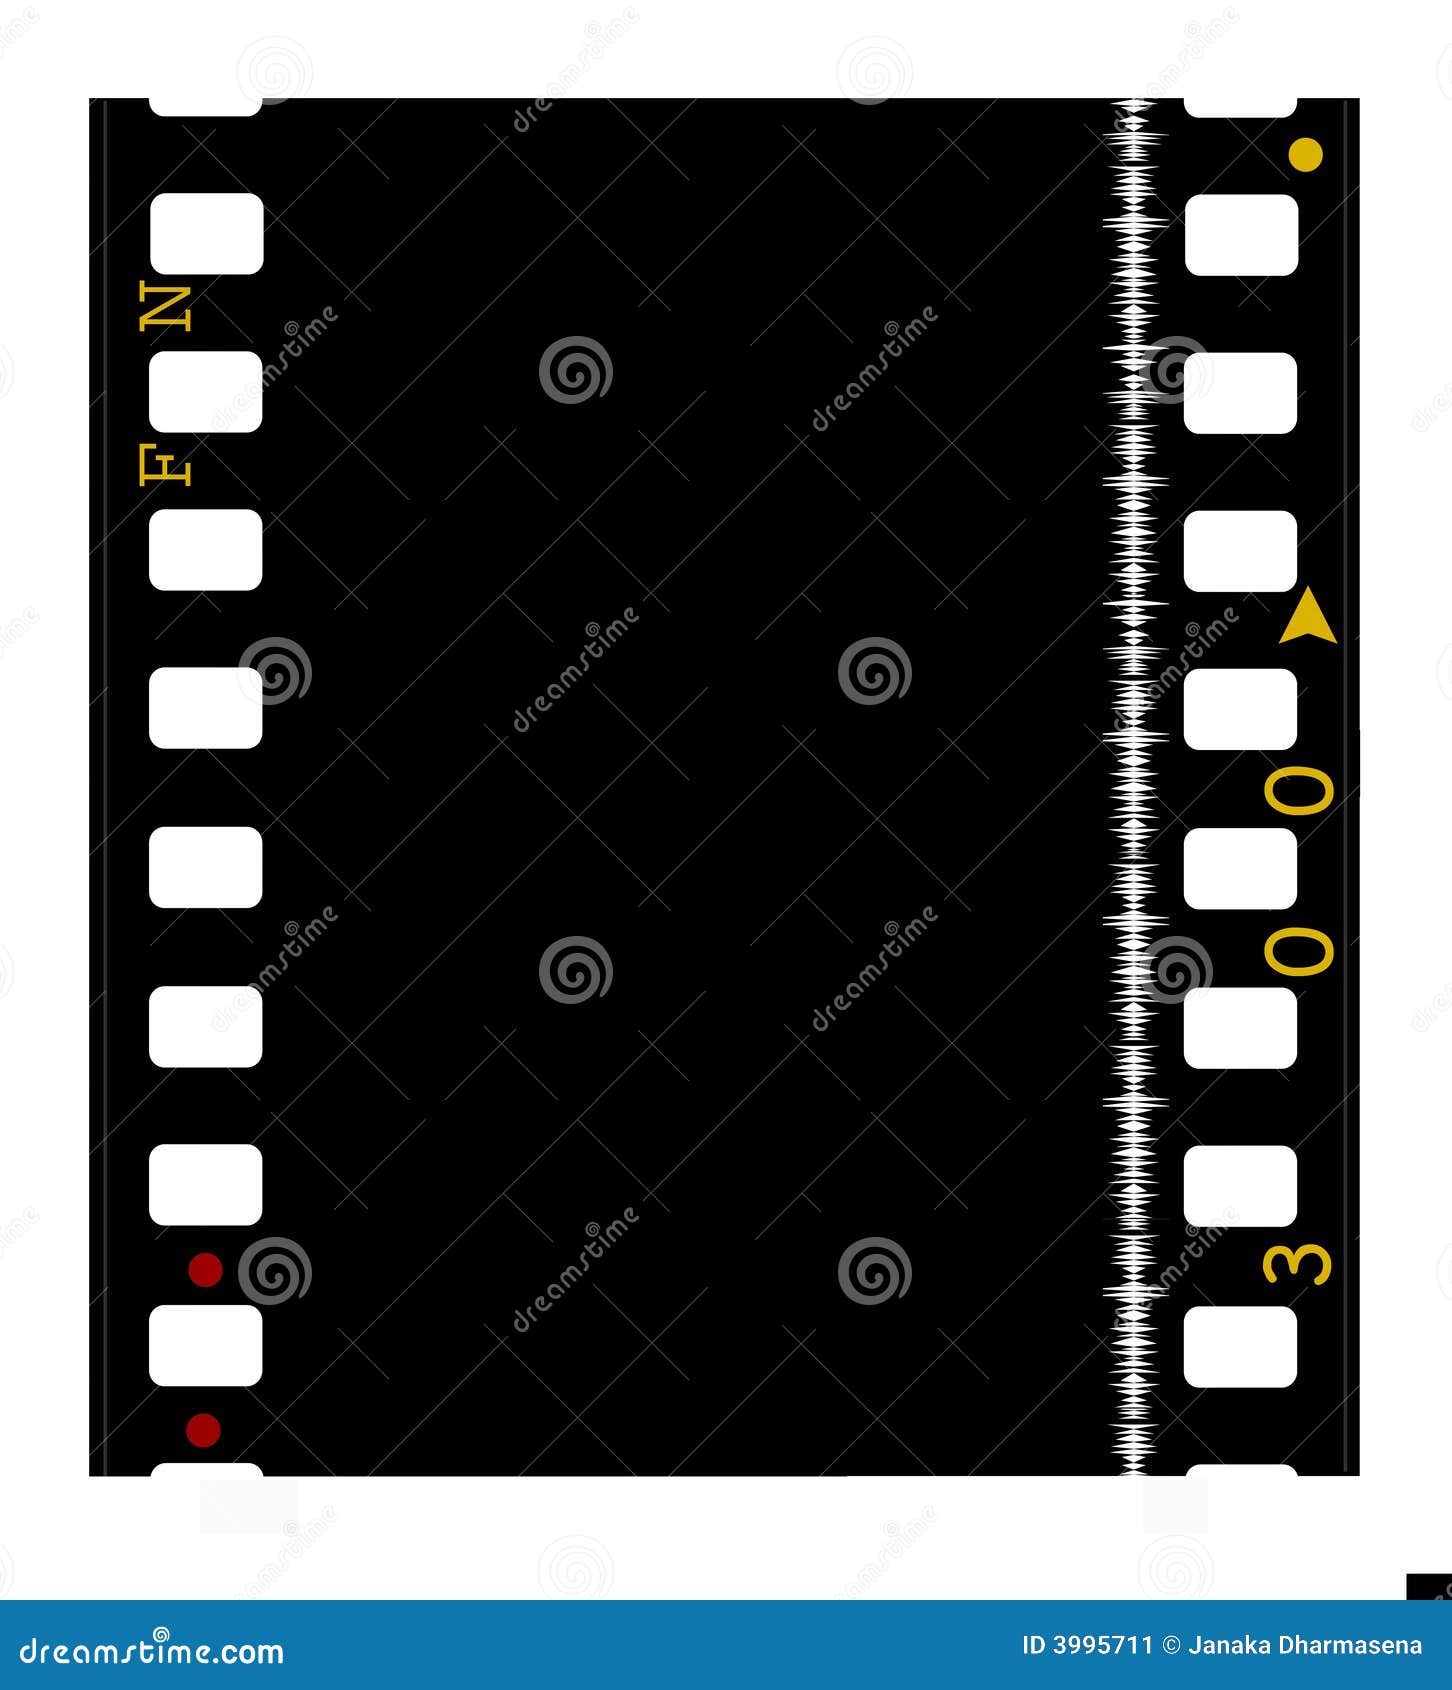 35 mm movie Film reel stock illustration. Illustration of